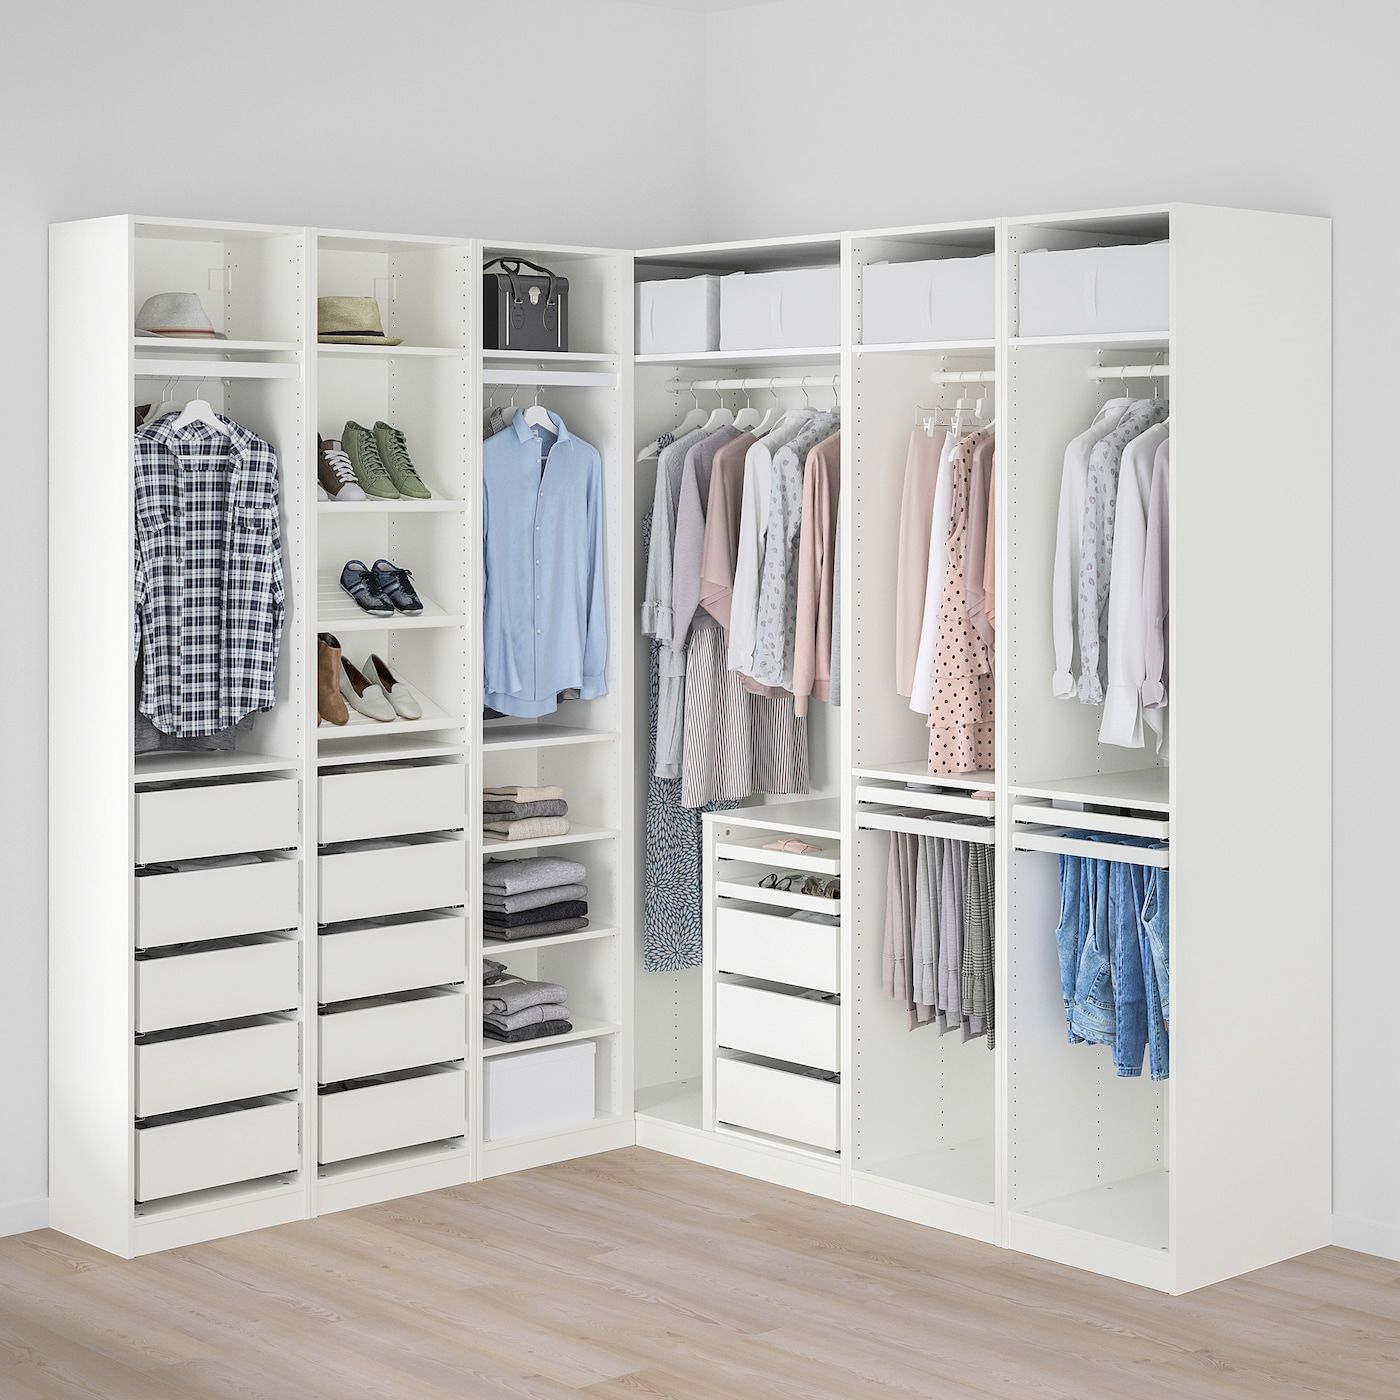 Pax Corner Wardrobe, White, 211/213x236 Cm (827/8/837/8x927/8") – Ikea Throughout White Corner Wardrobes (Photo 14 of 15)